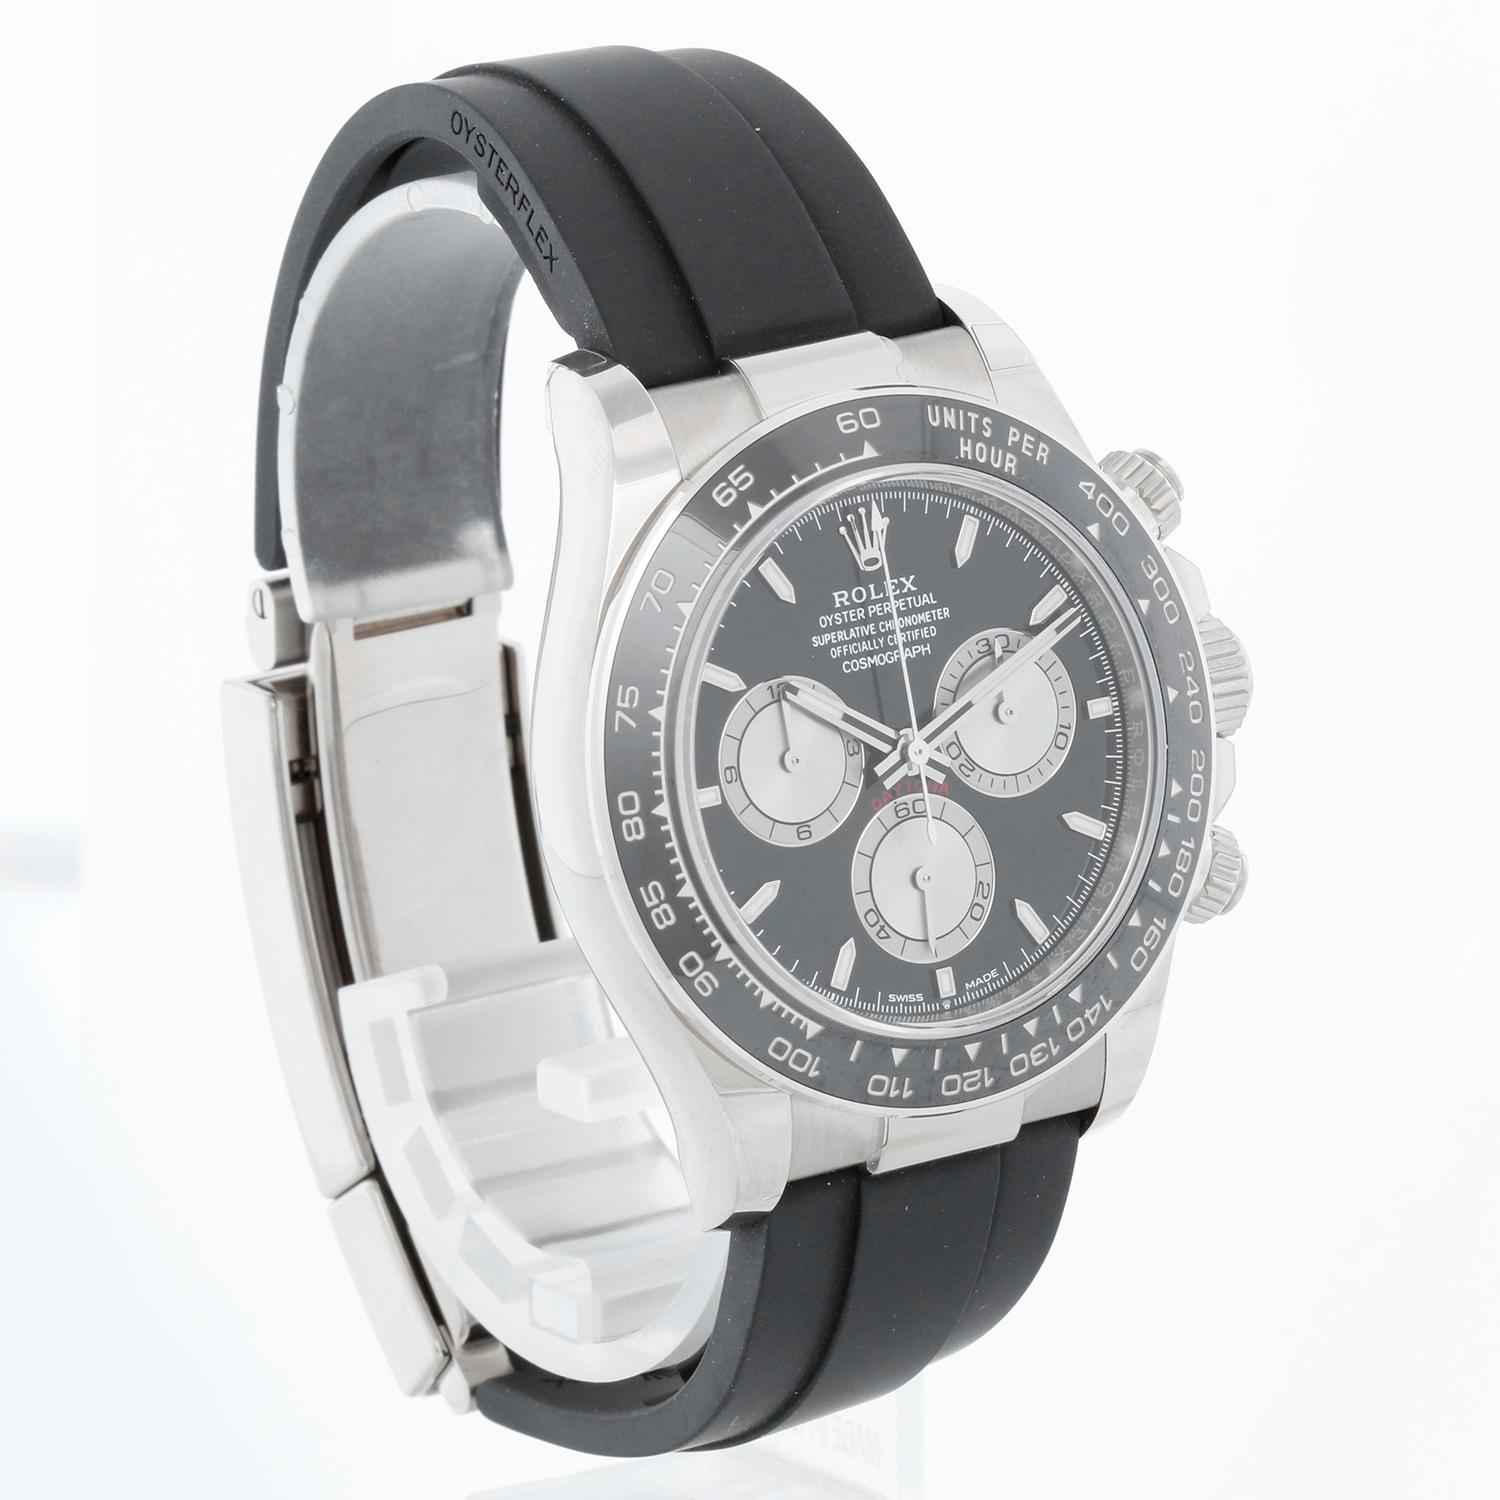 Rolex Cosmograph Daytona White Gold Watch 126519LN In New Condition For Sale In Dallas, TX